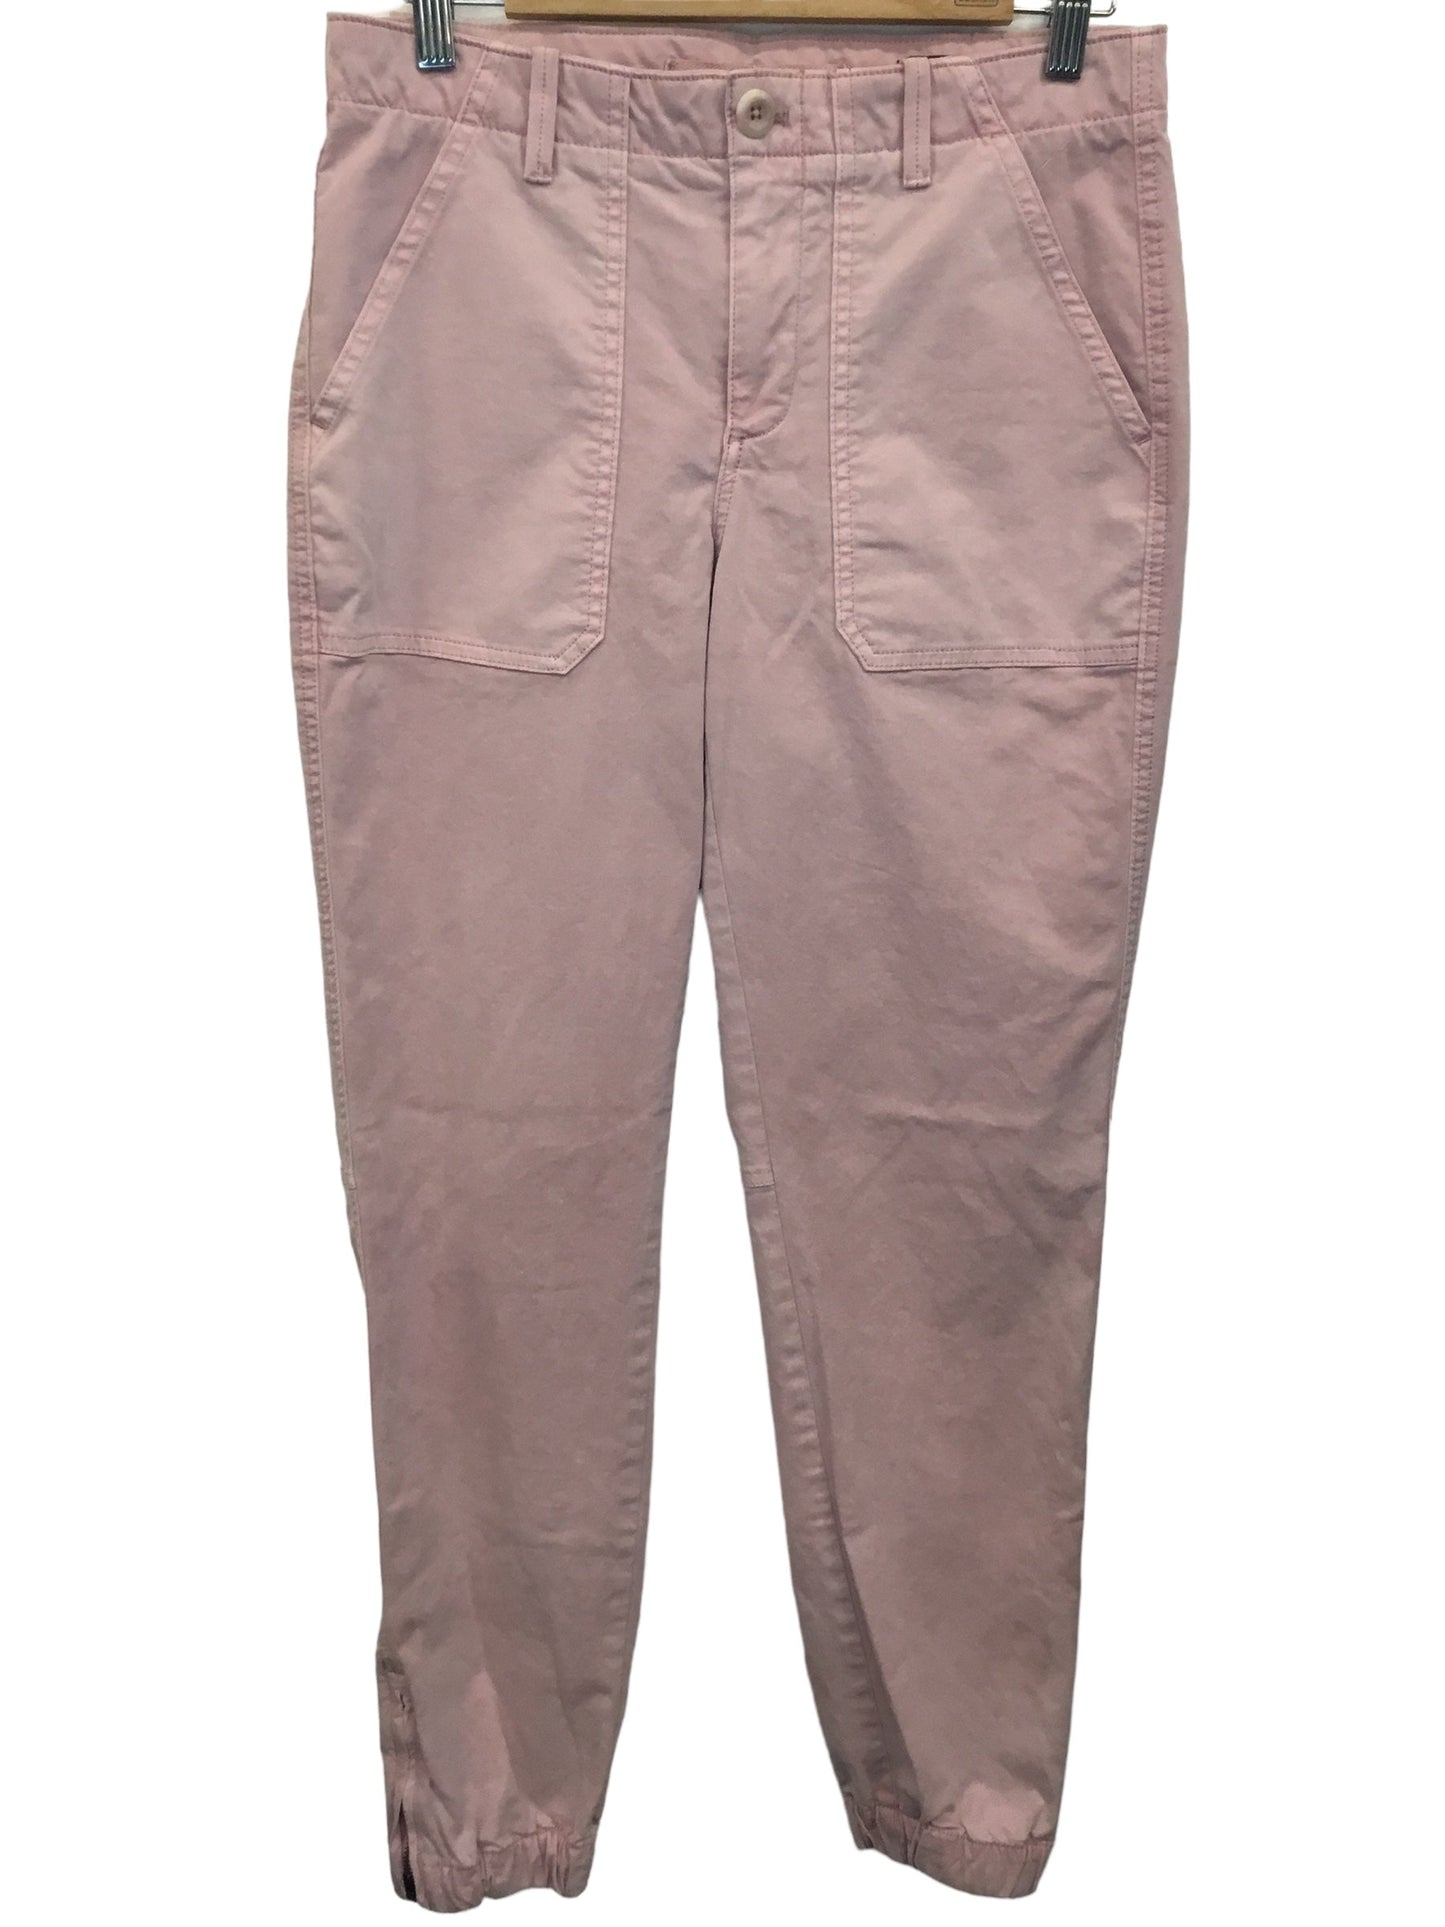 Pajama Pants By Banana Republic  Size: 6long